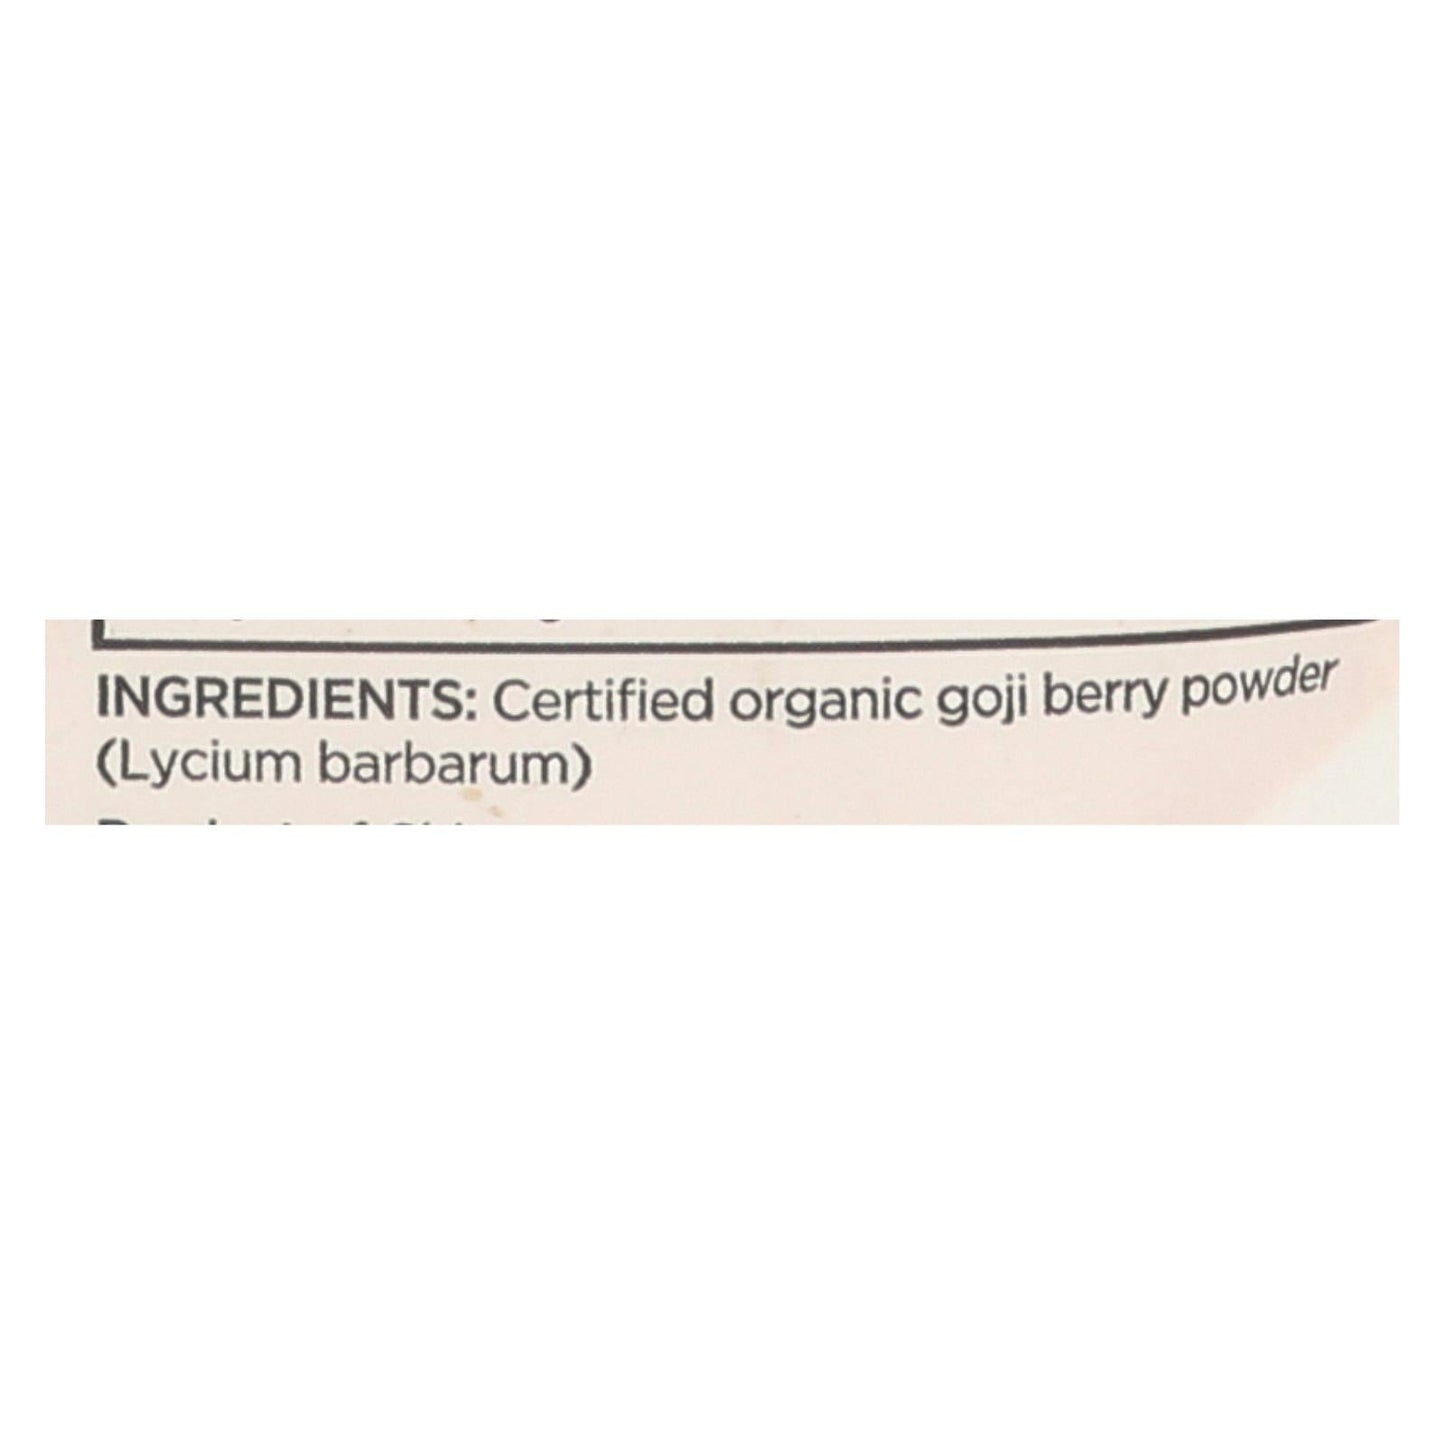 Navitas Naturals Goji Berry Powder - Organic - Freeze-dried - 4 Oz - Case Of 12 | OnlyNaturals.us